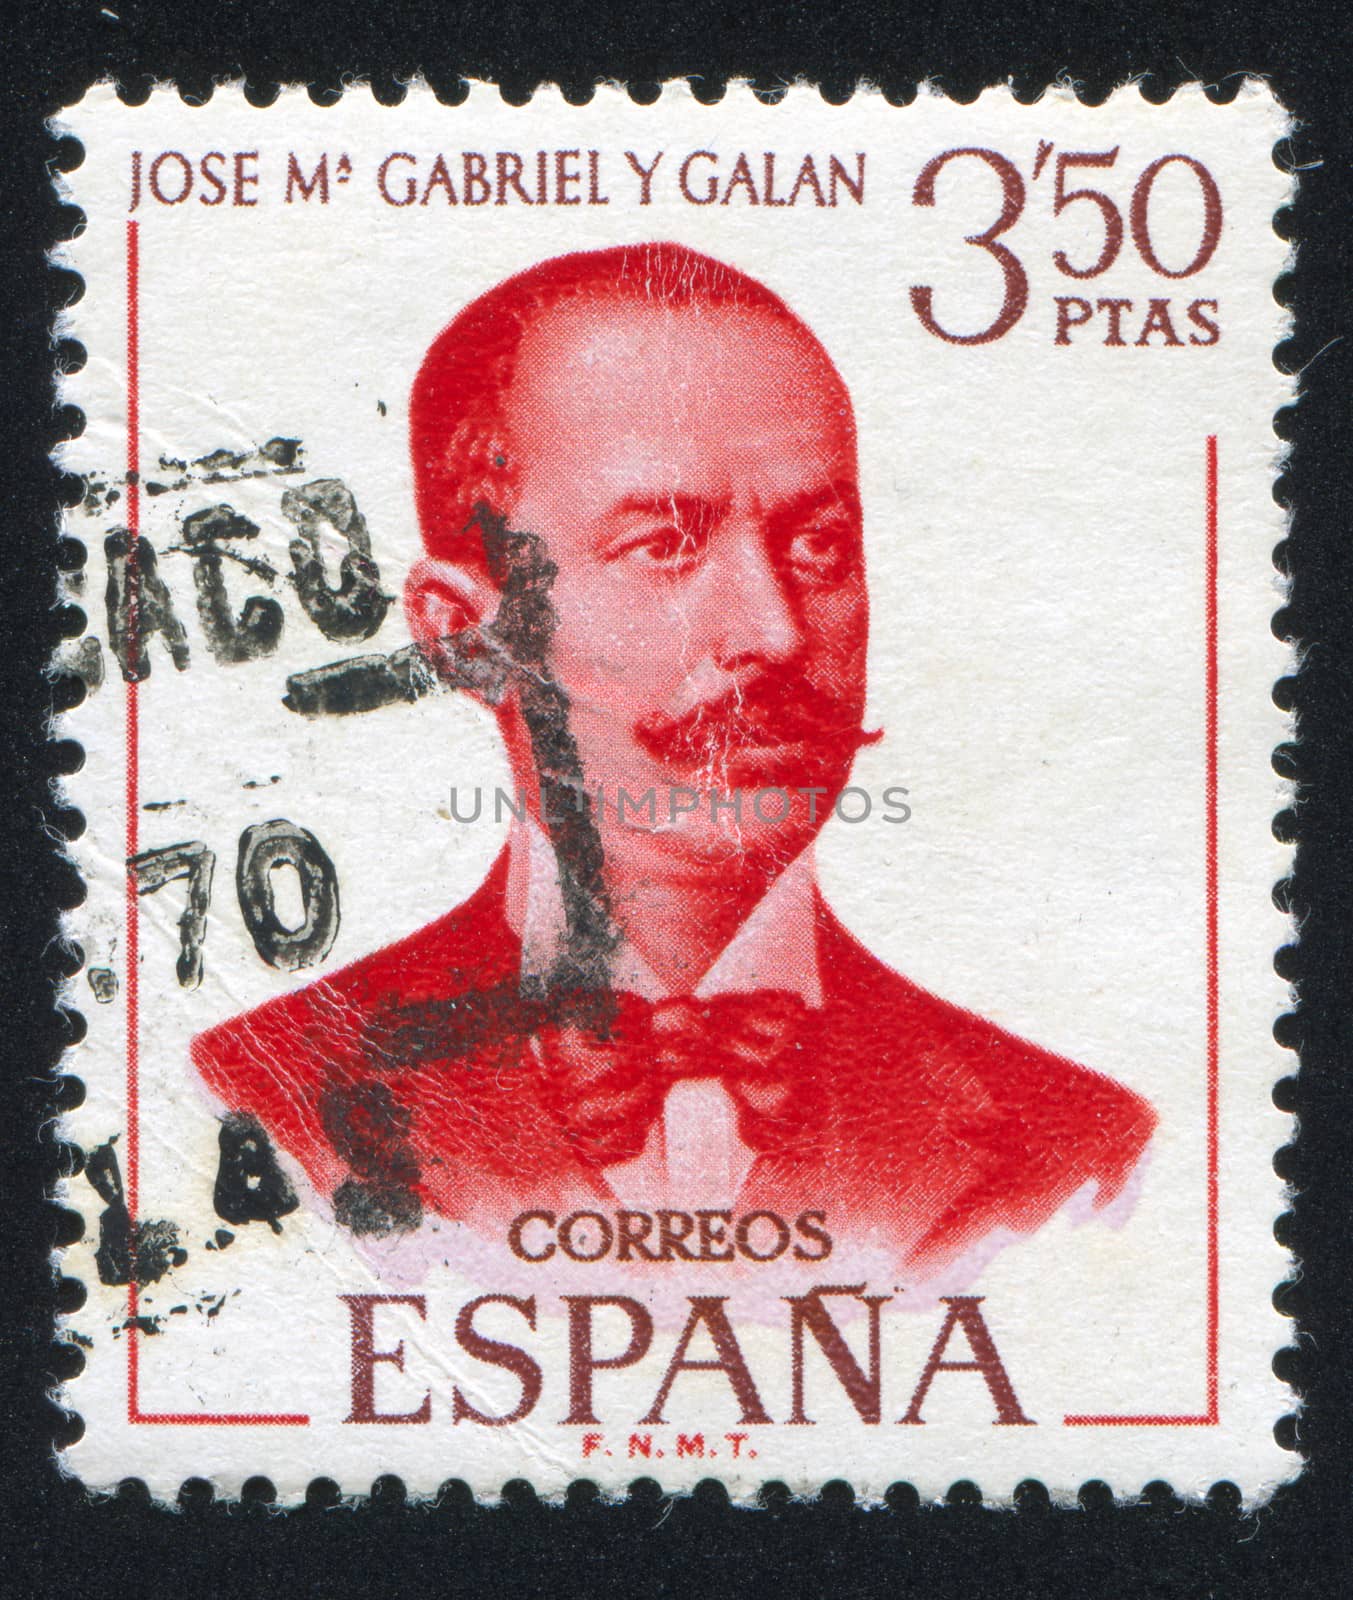 SPAIN - CIRCA 1970: stamp printed by Spain, shows Jose M. Gabriel y Galan, circa 1970